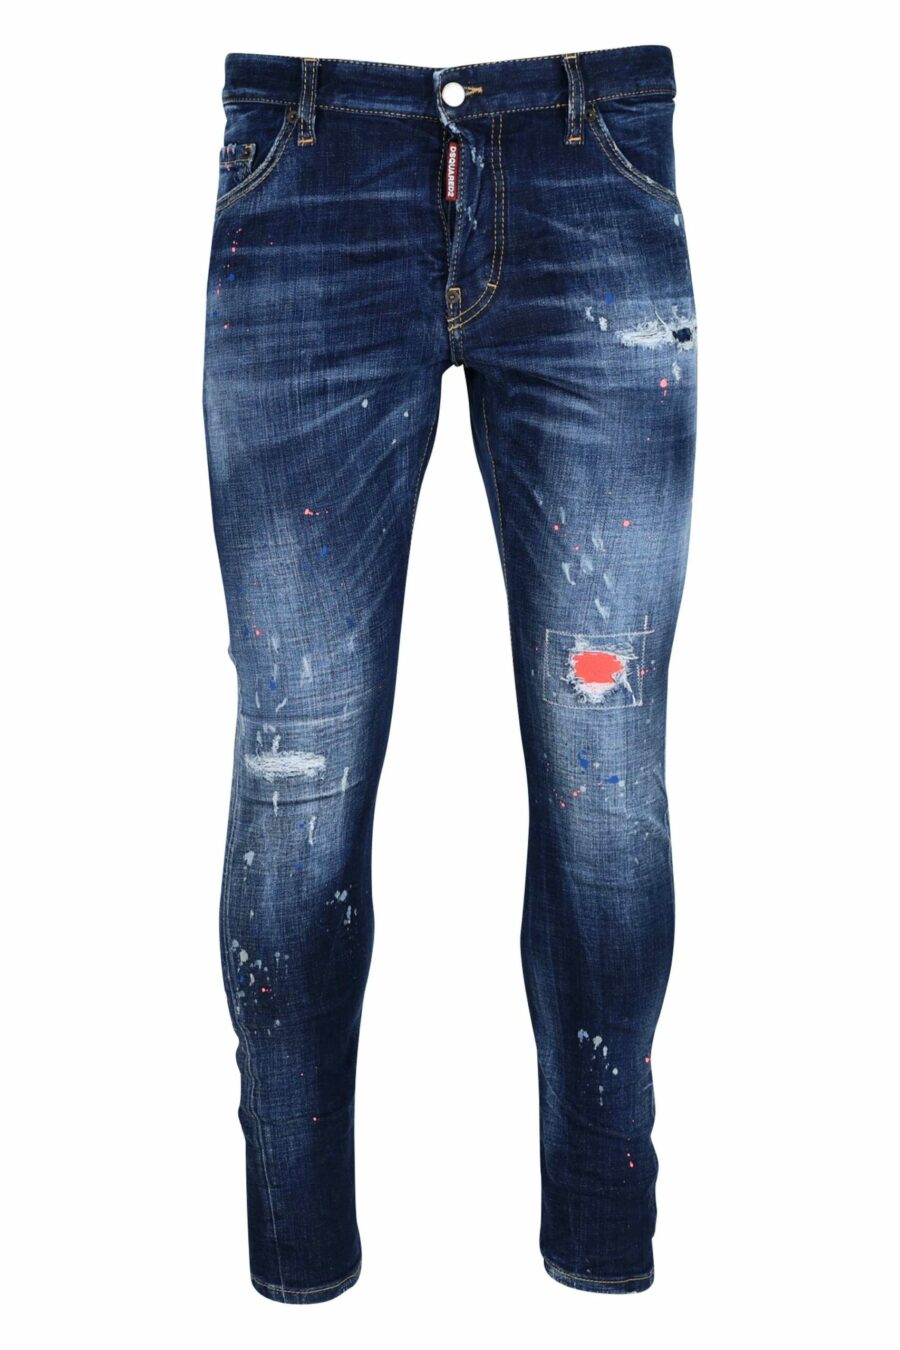 Blue "sexy twist jean" jeans worn with orange paint - 8054148308292 scaled